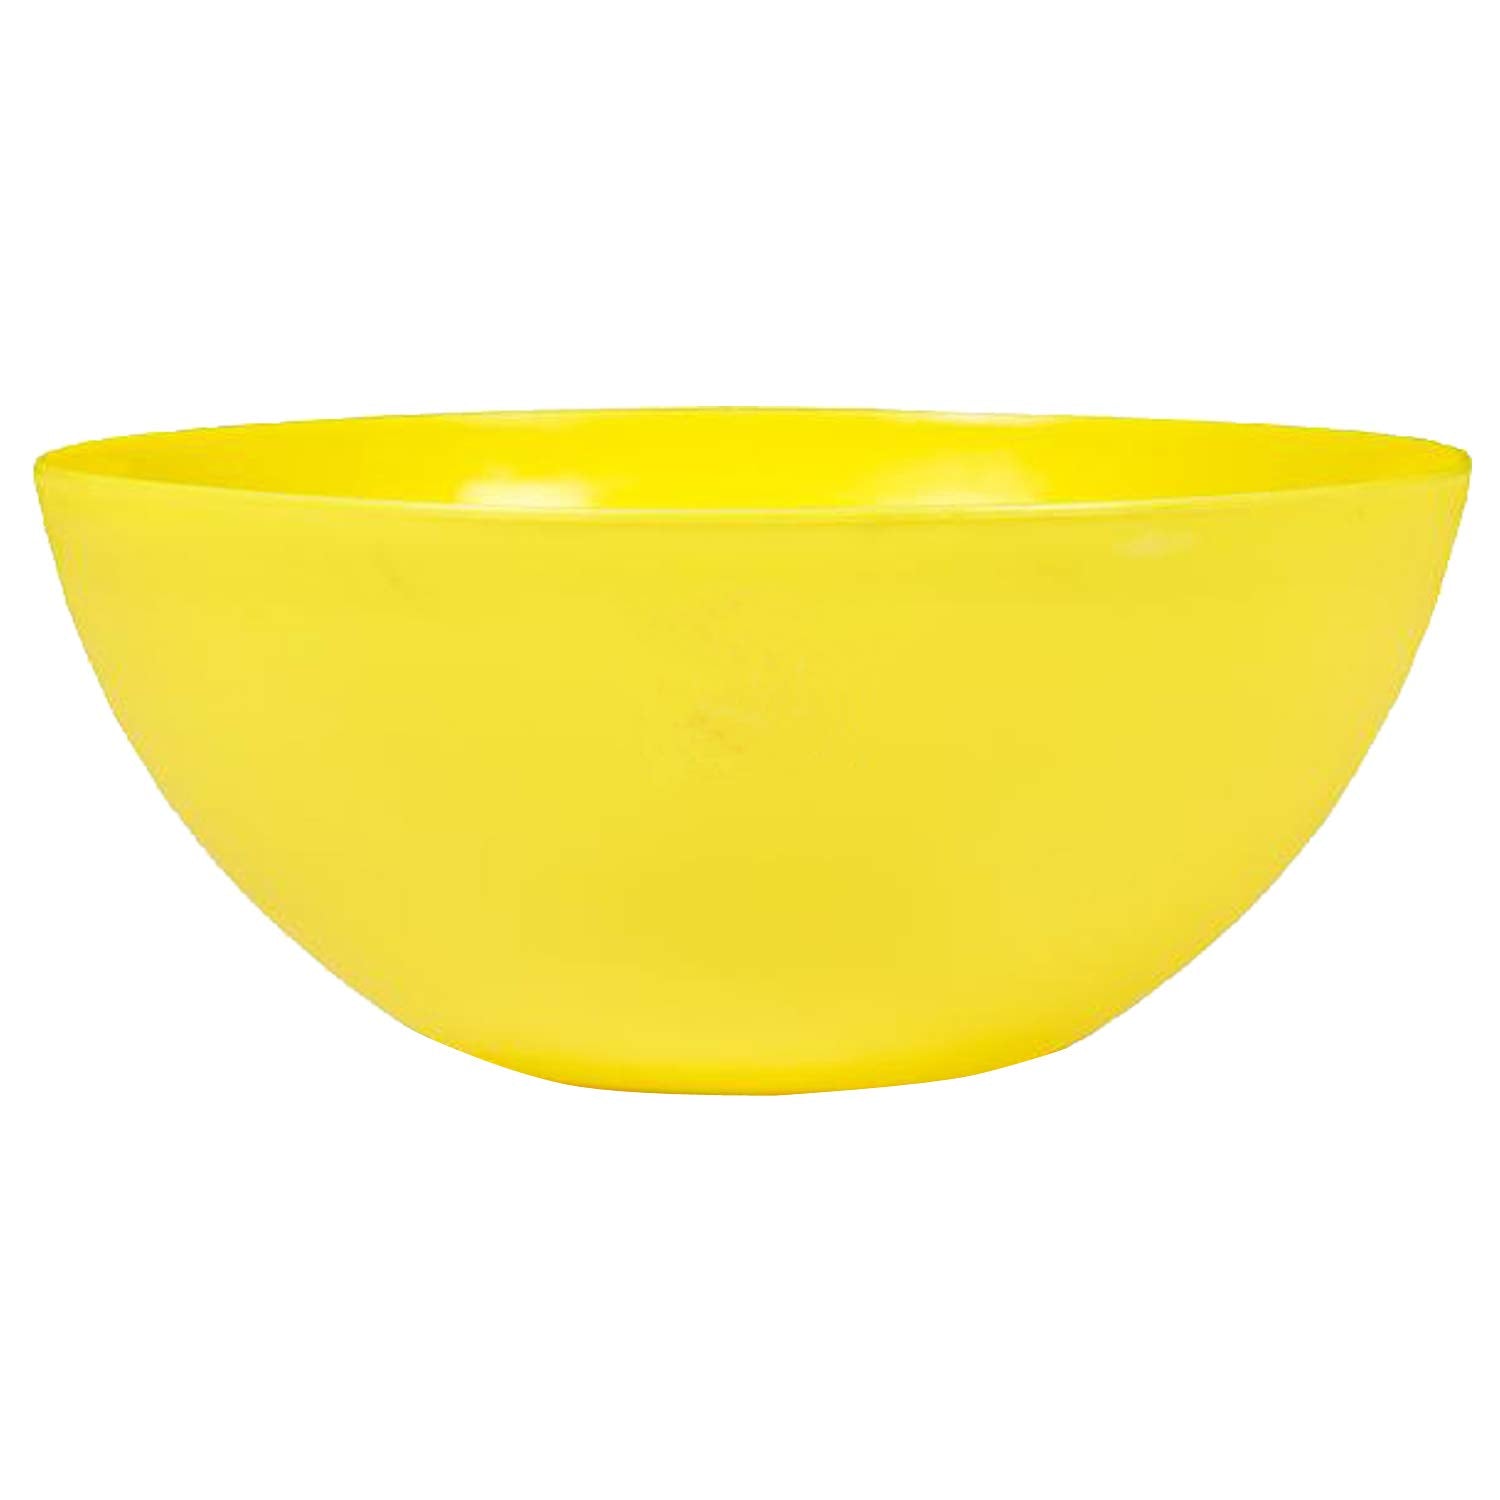 Kuber Industries Plastic Solid Bowl Set - 1000ml, 6 Piece, Multicolor